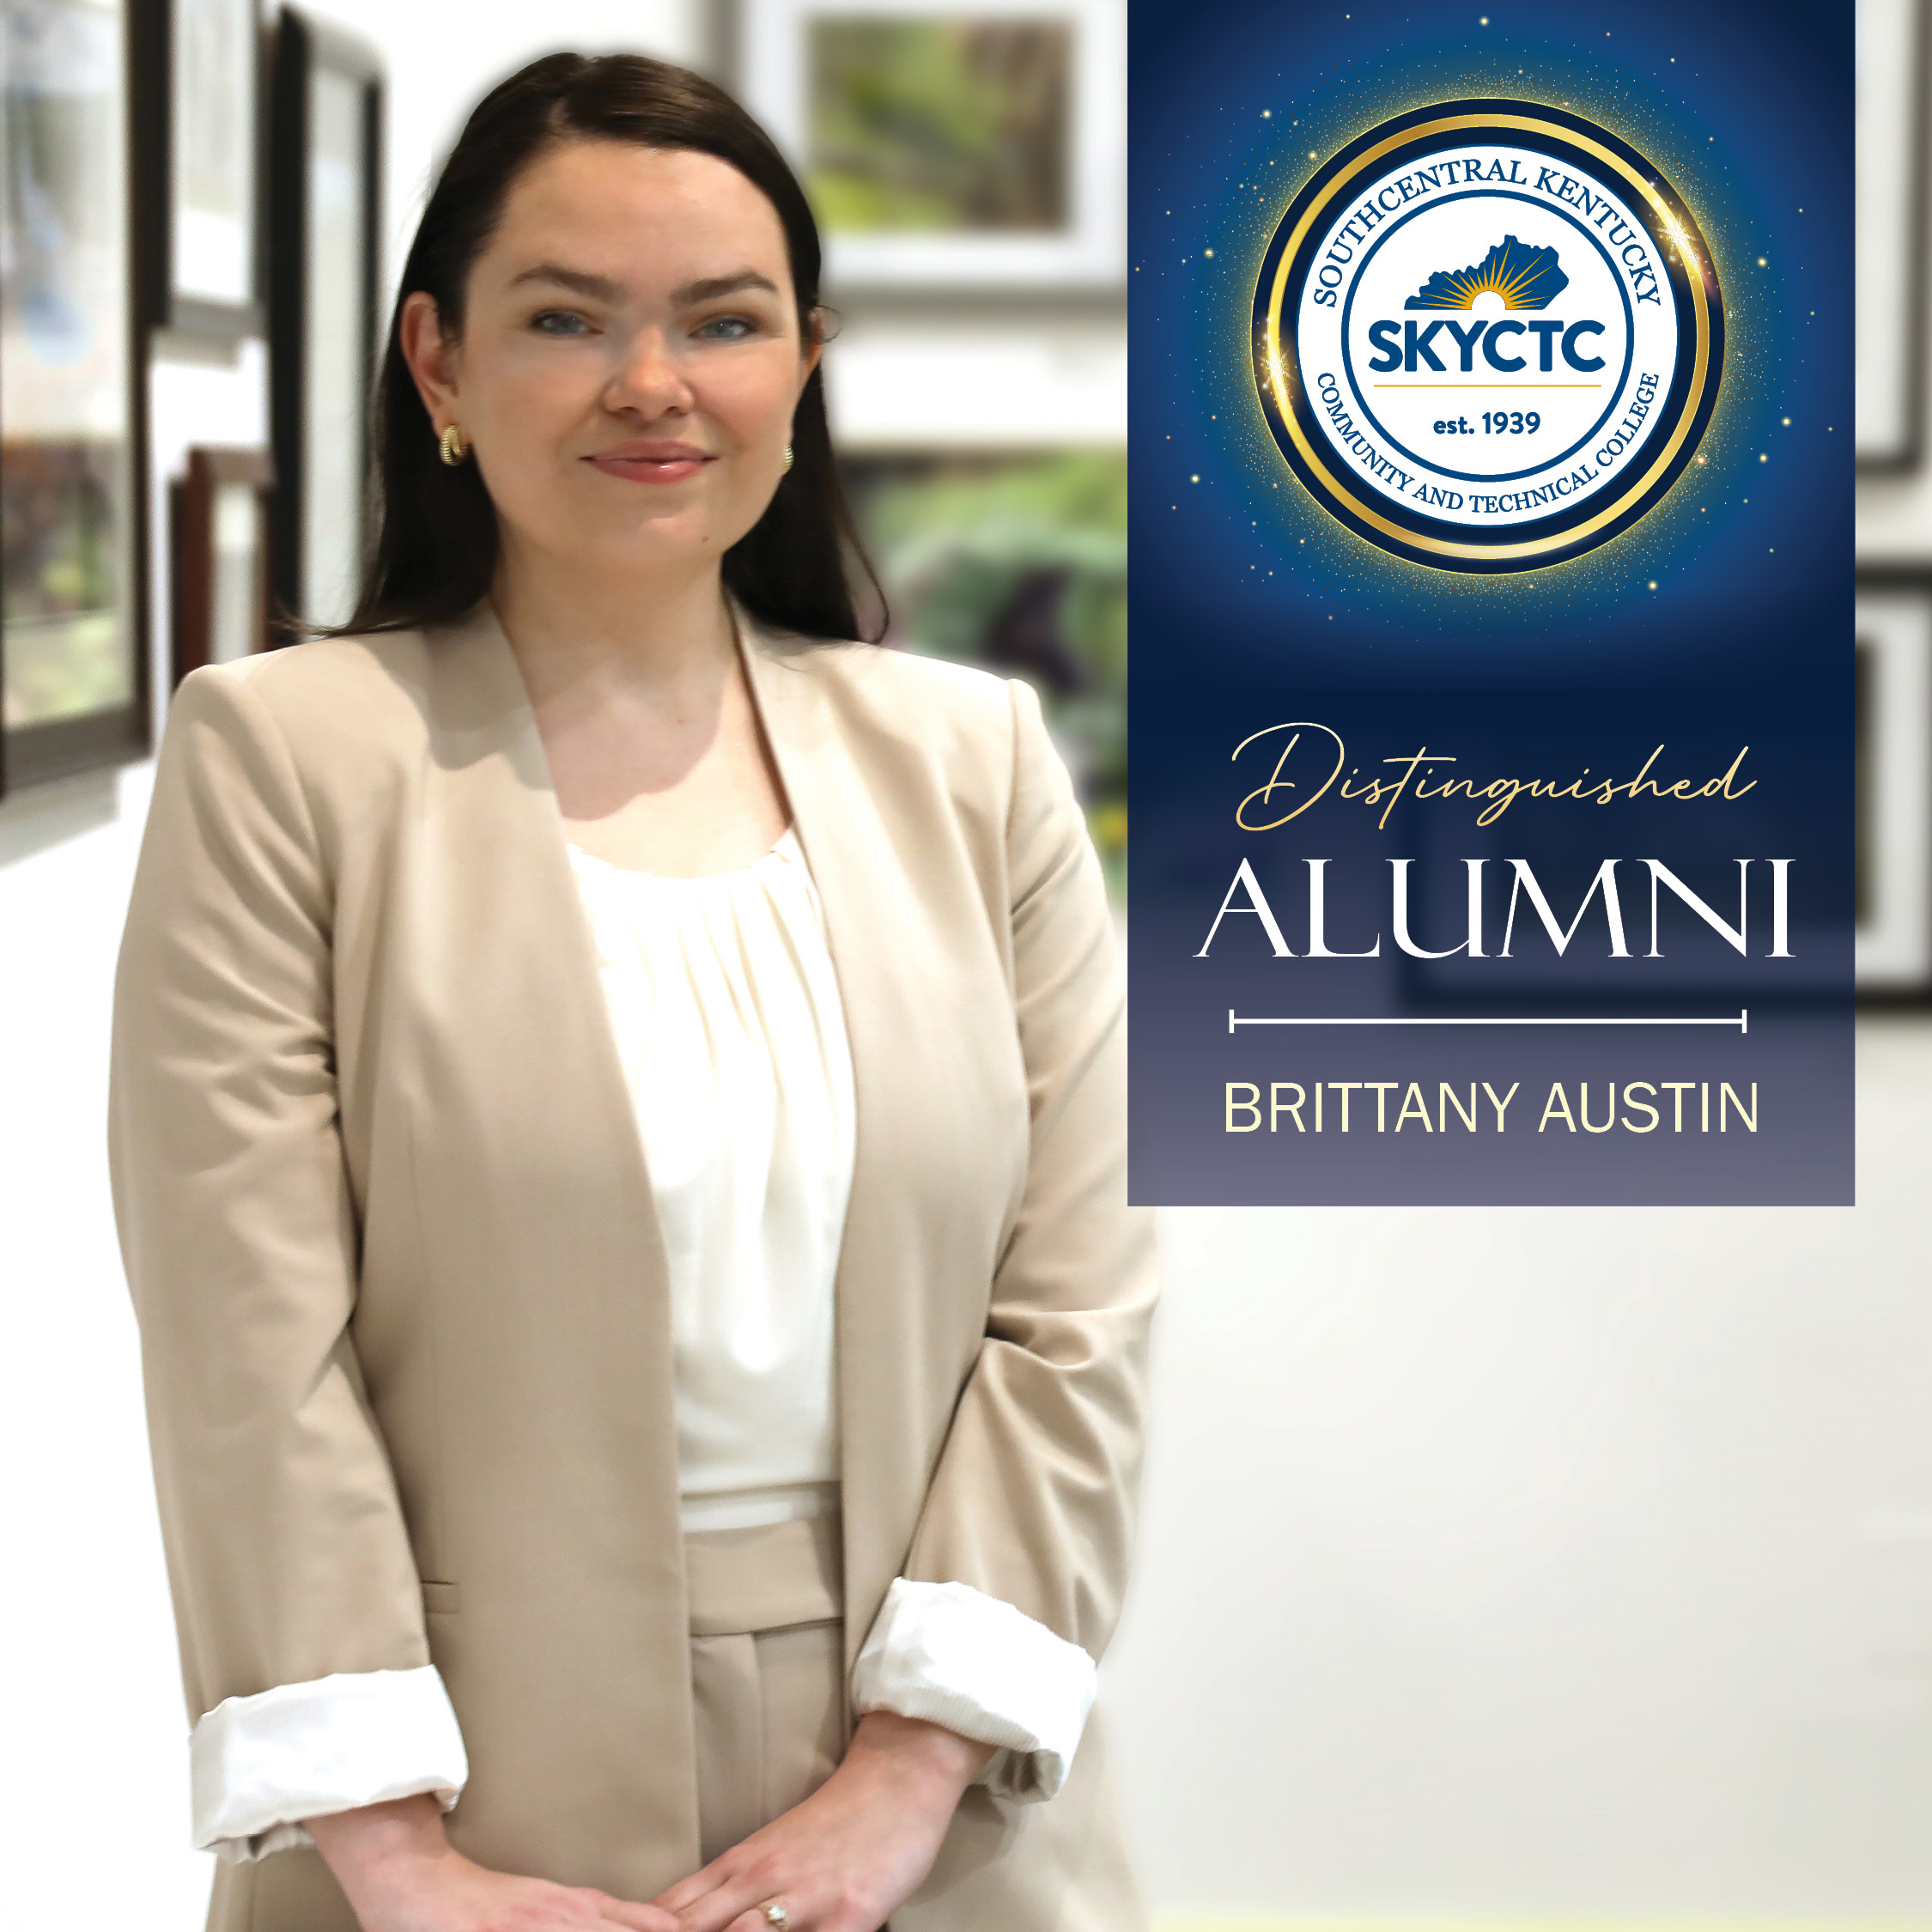 Brittany Austin distinguidhed Alumni